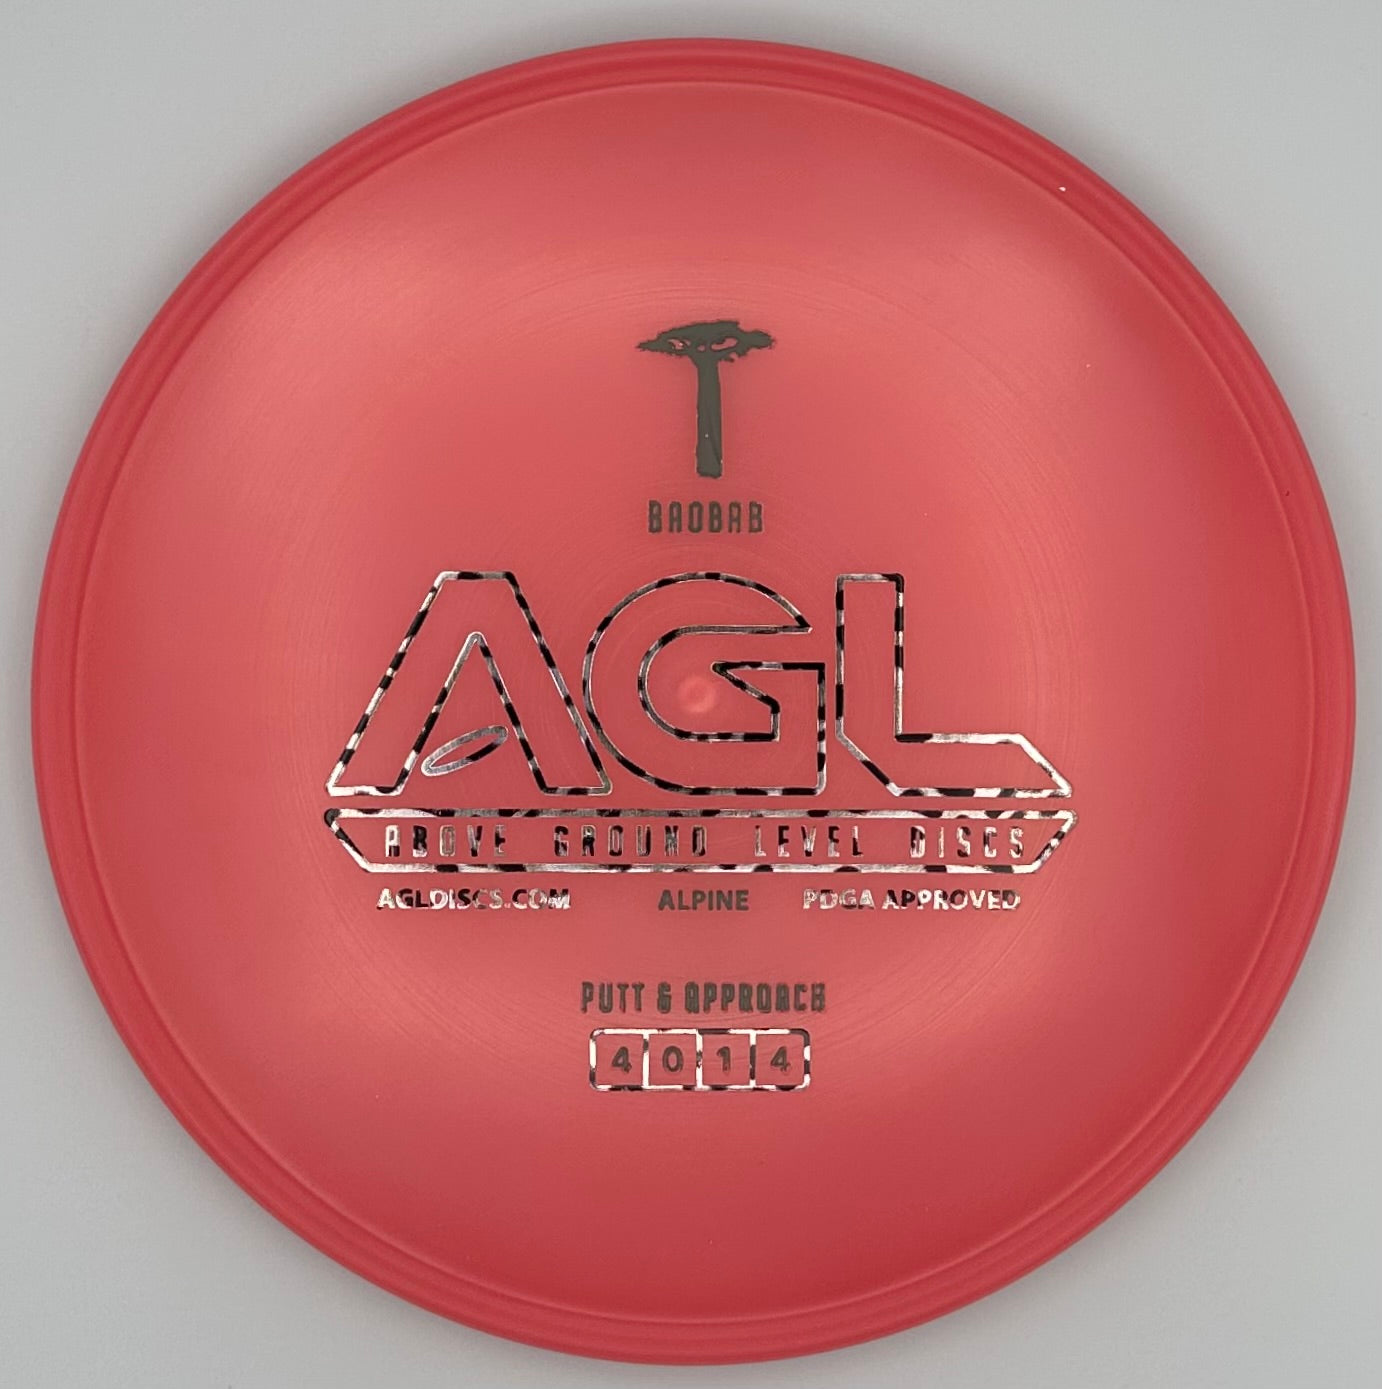 AGL Discs - Hibiscus Punch Alpine Baobab (AGL Bar Stamp)